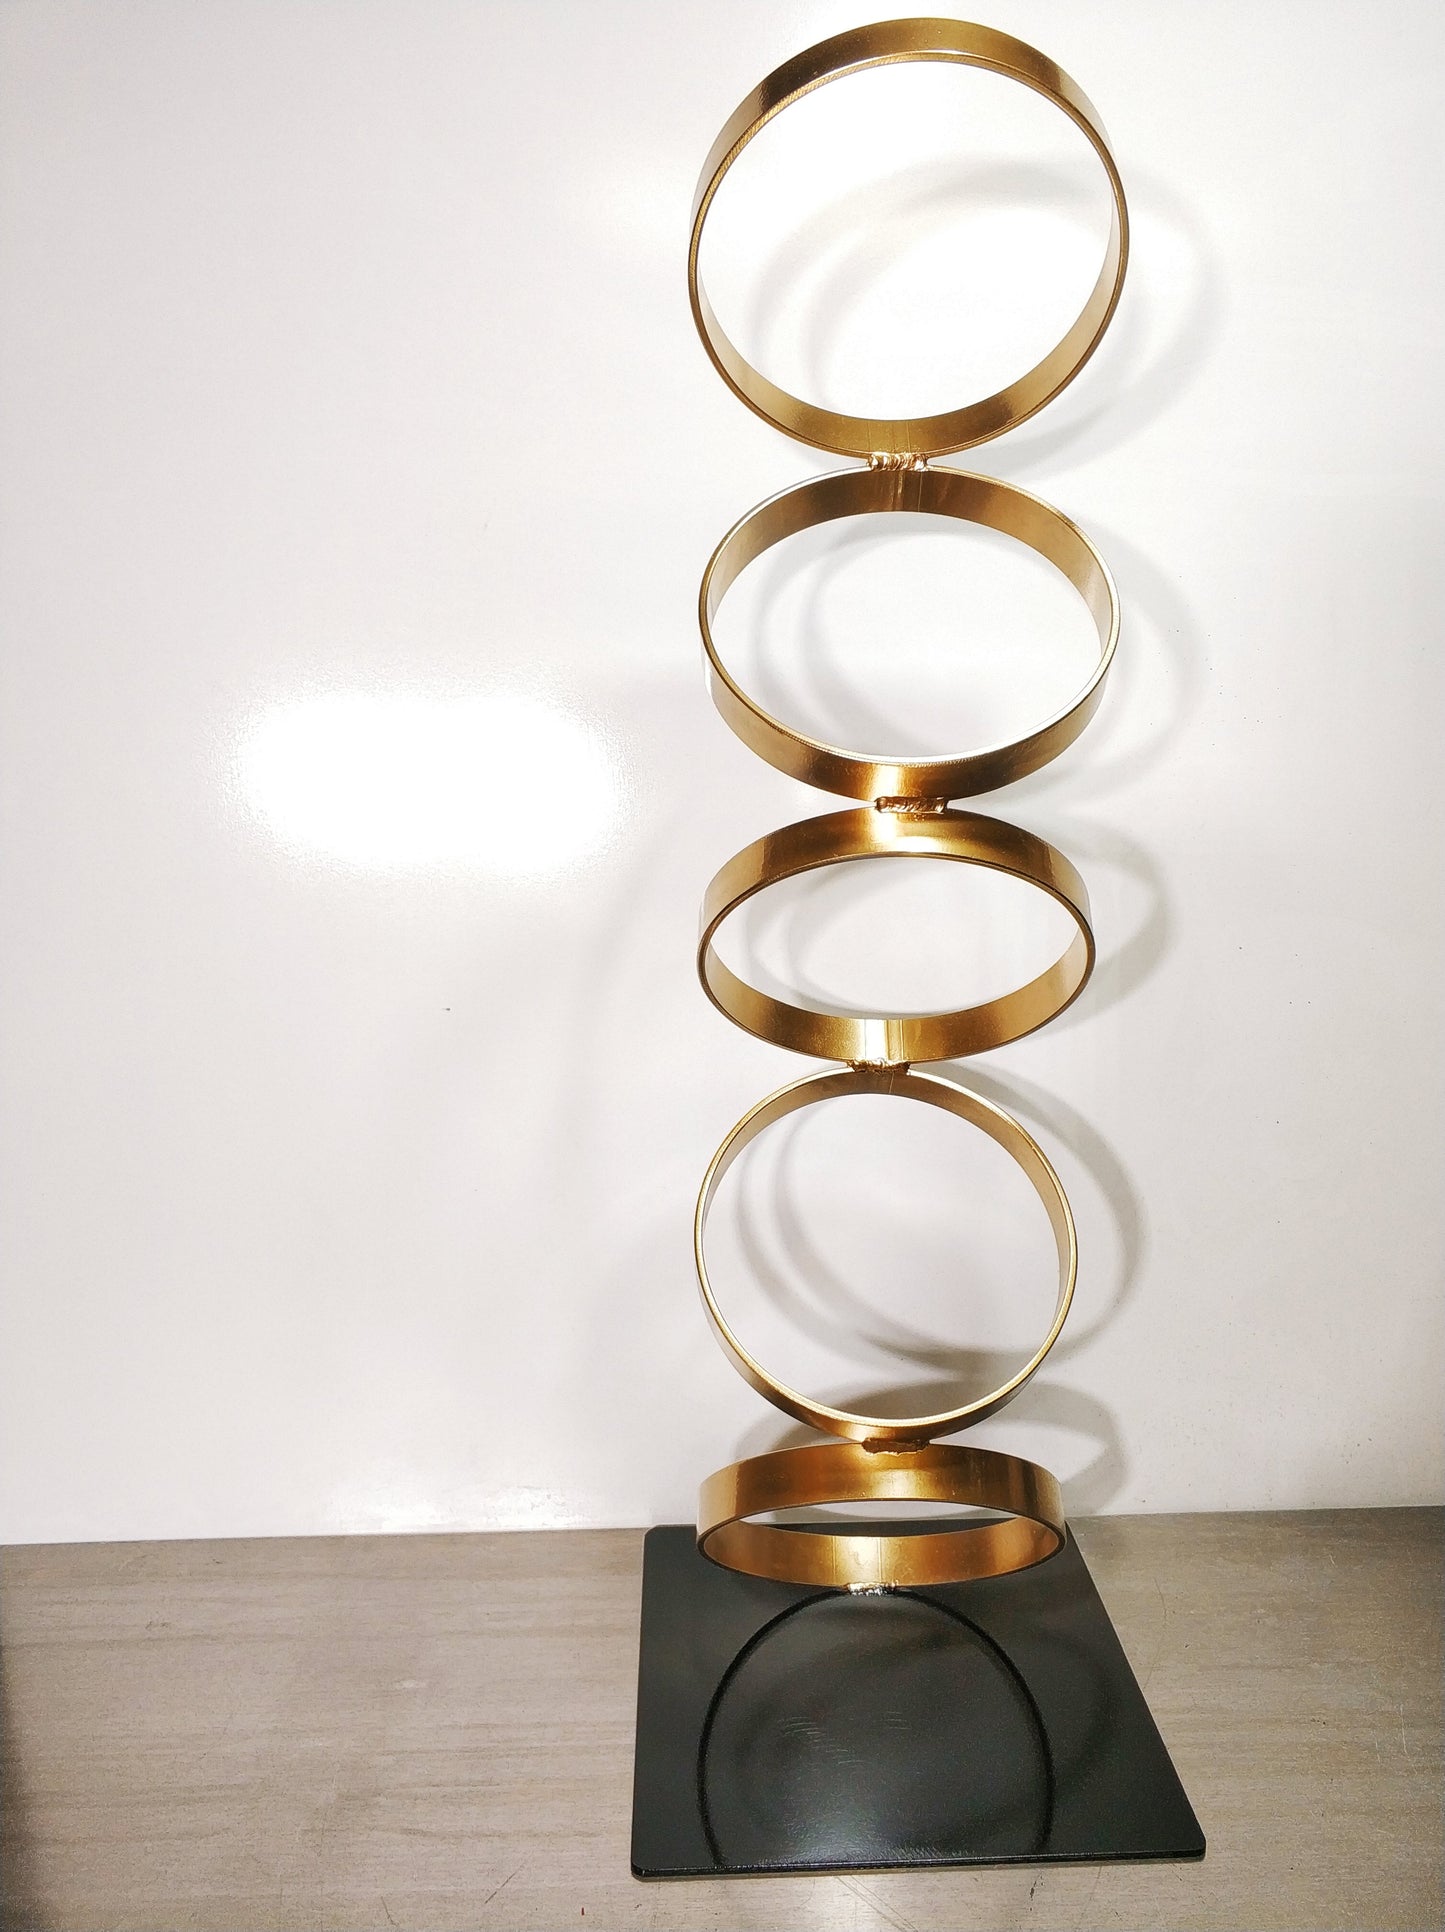 5 Ring GOLD sculpture  Mid Century Modern Metal Sculpture Art Abstract Simple Contemporary Decor Modernist by WALTER METAL ART